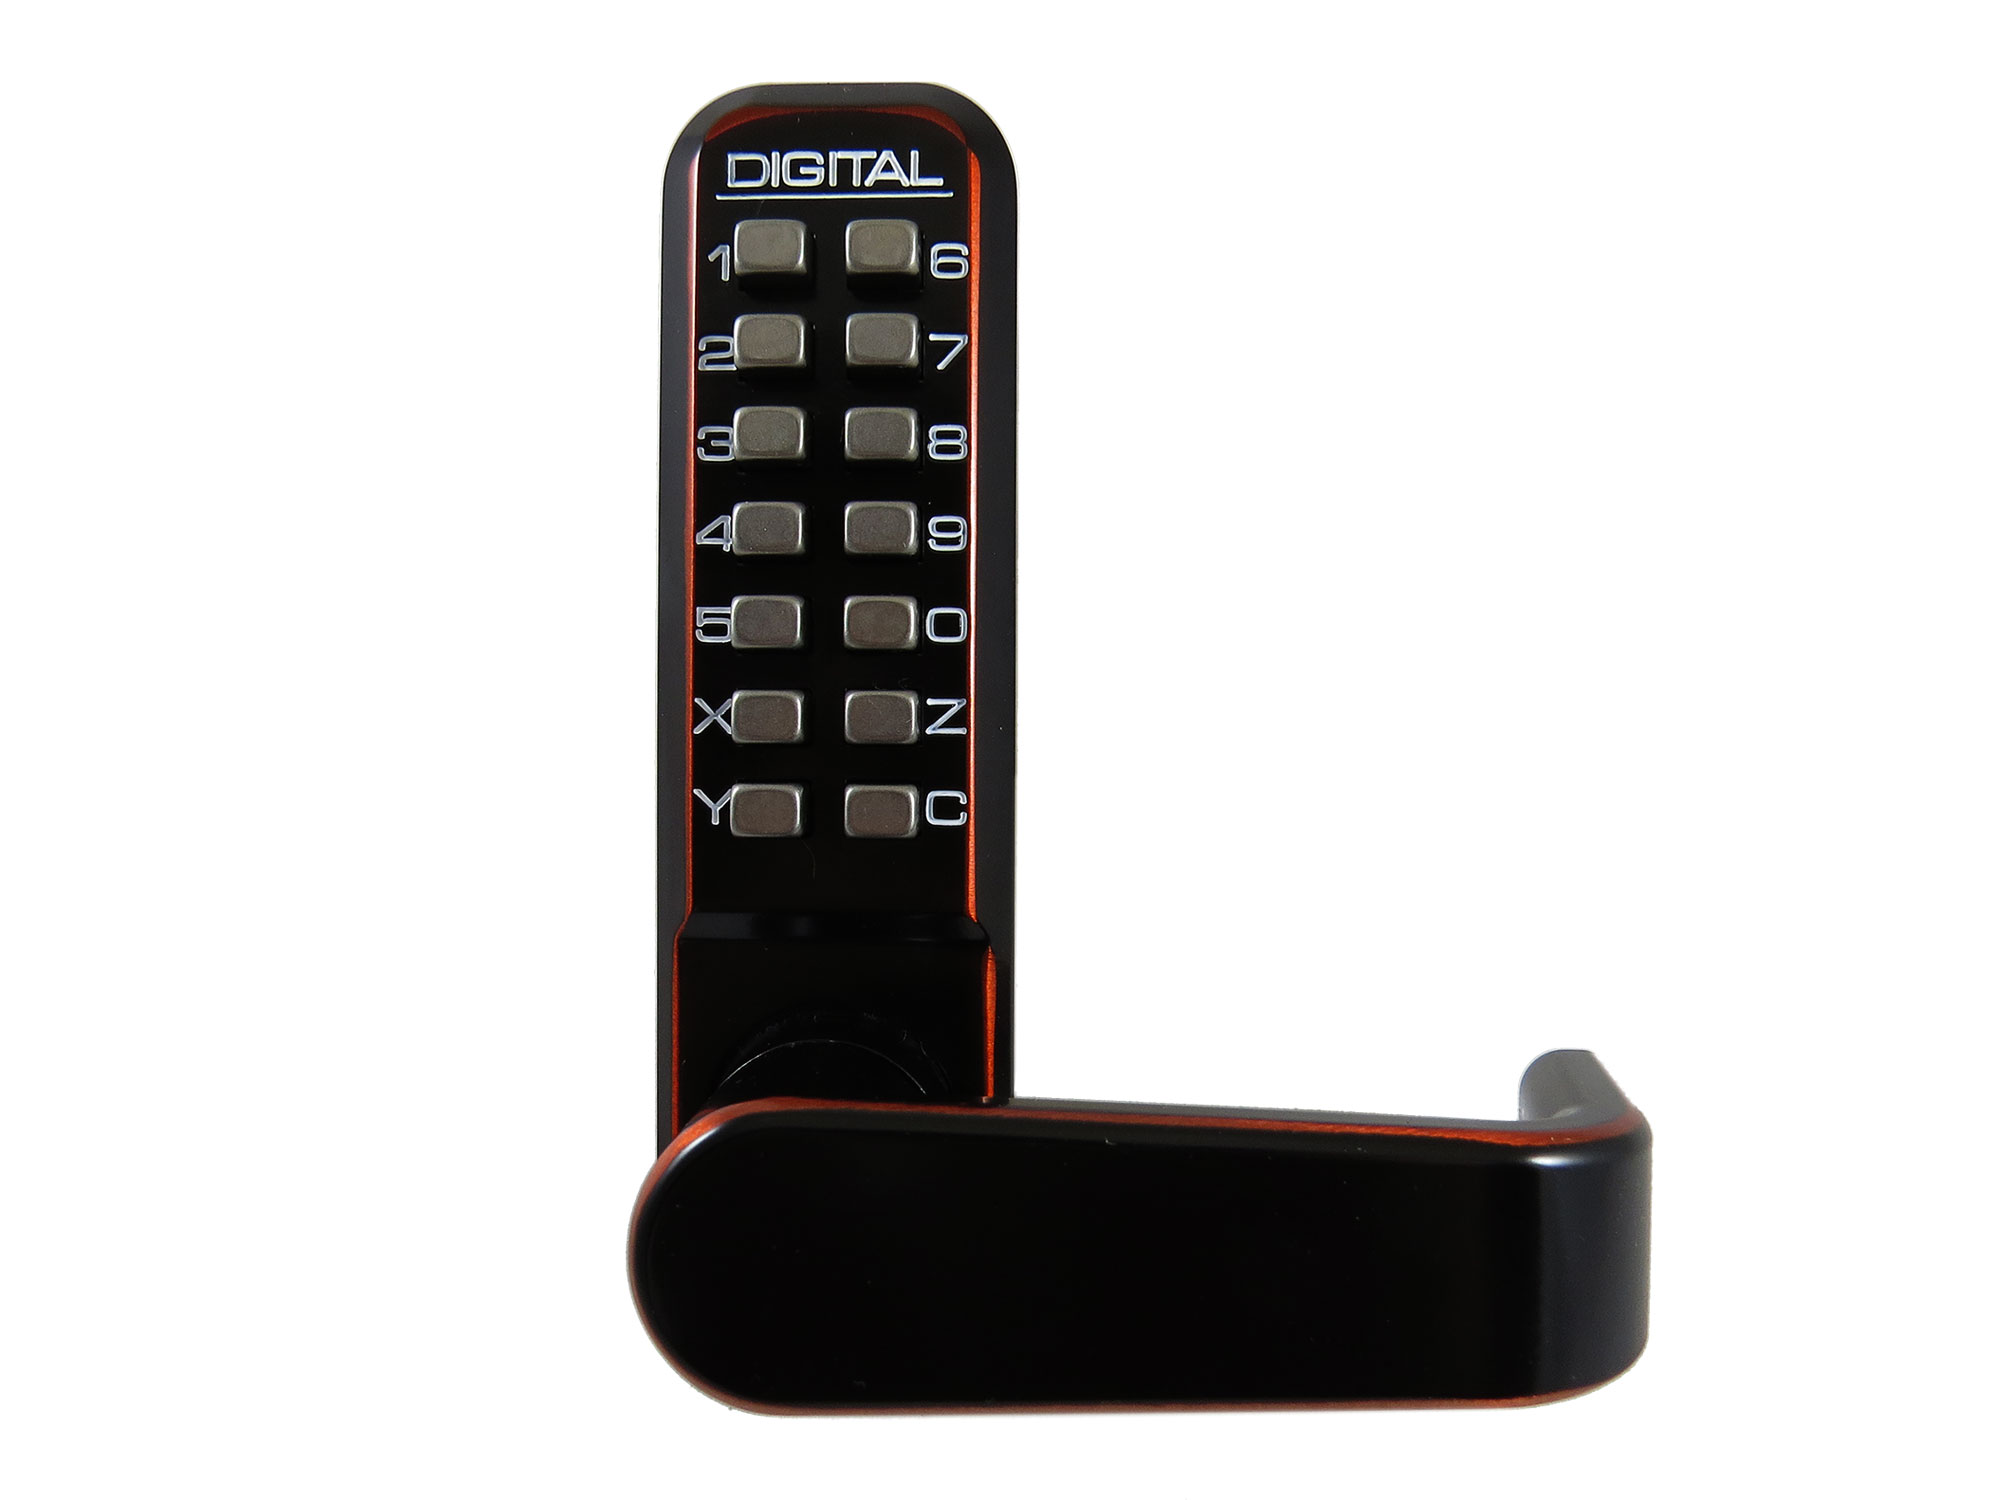 Lockey 2985 Narrow-Stile Passage Lever-Handle Latchbolt Keypad Lock